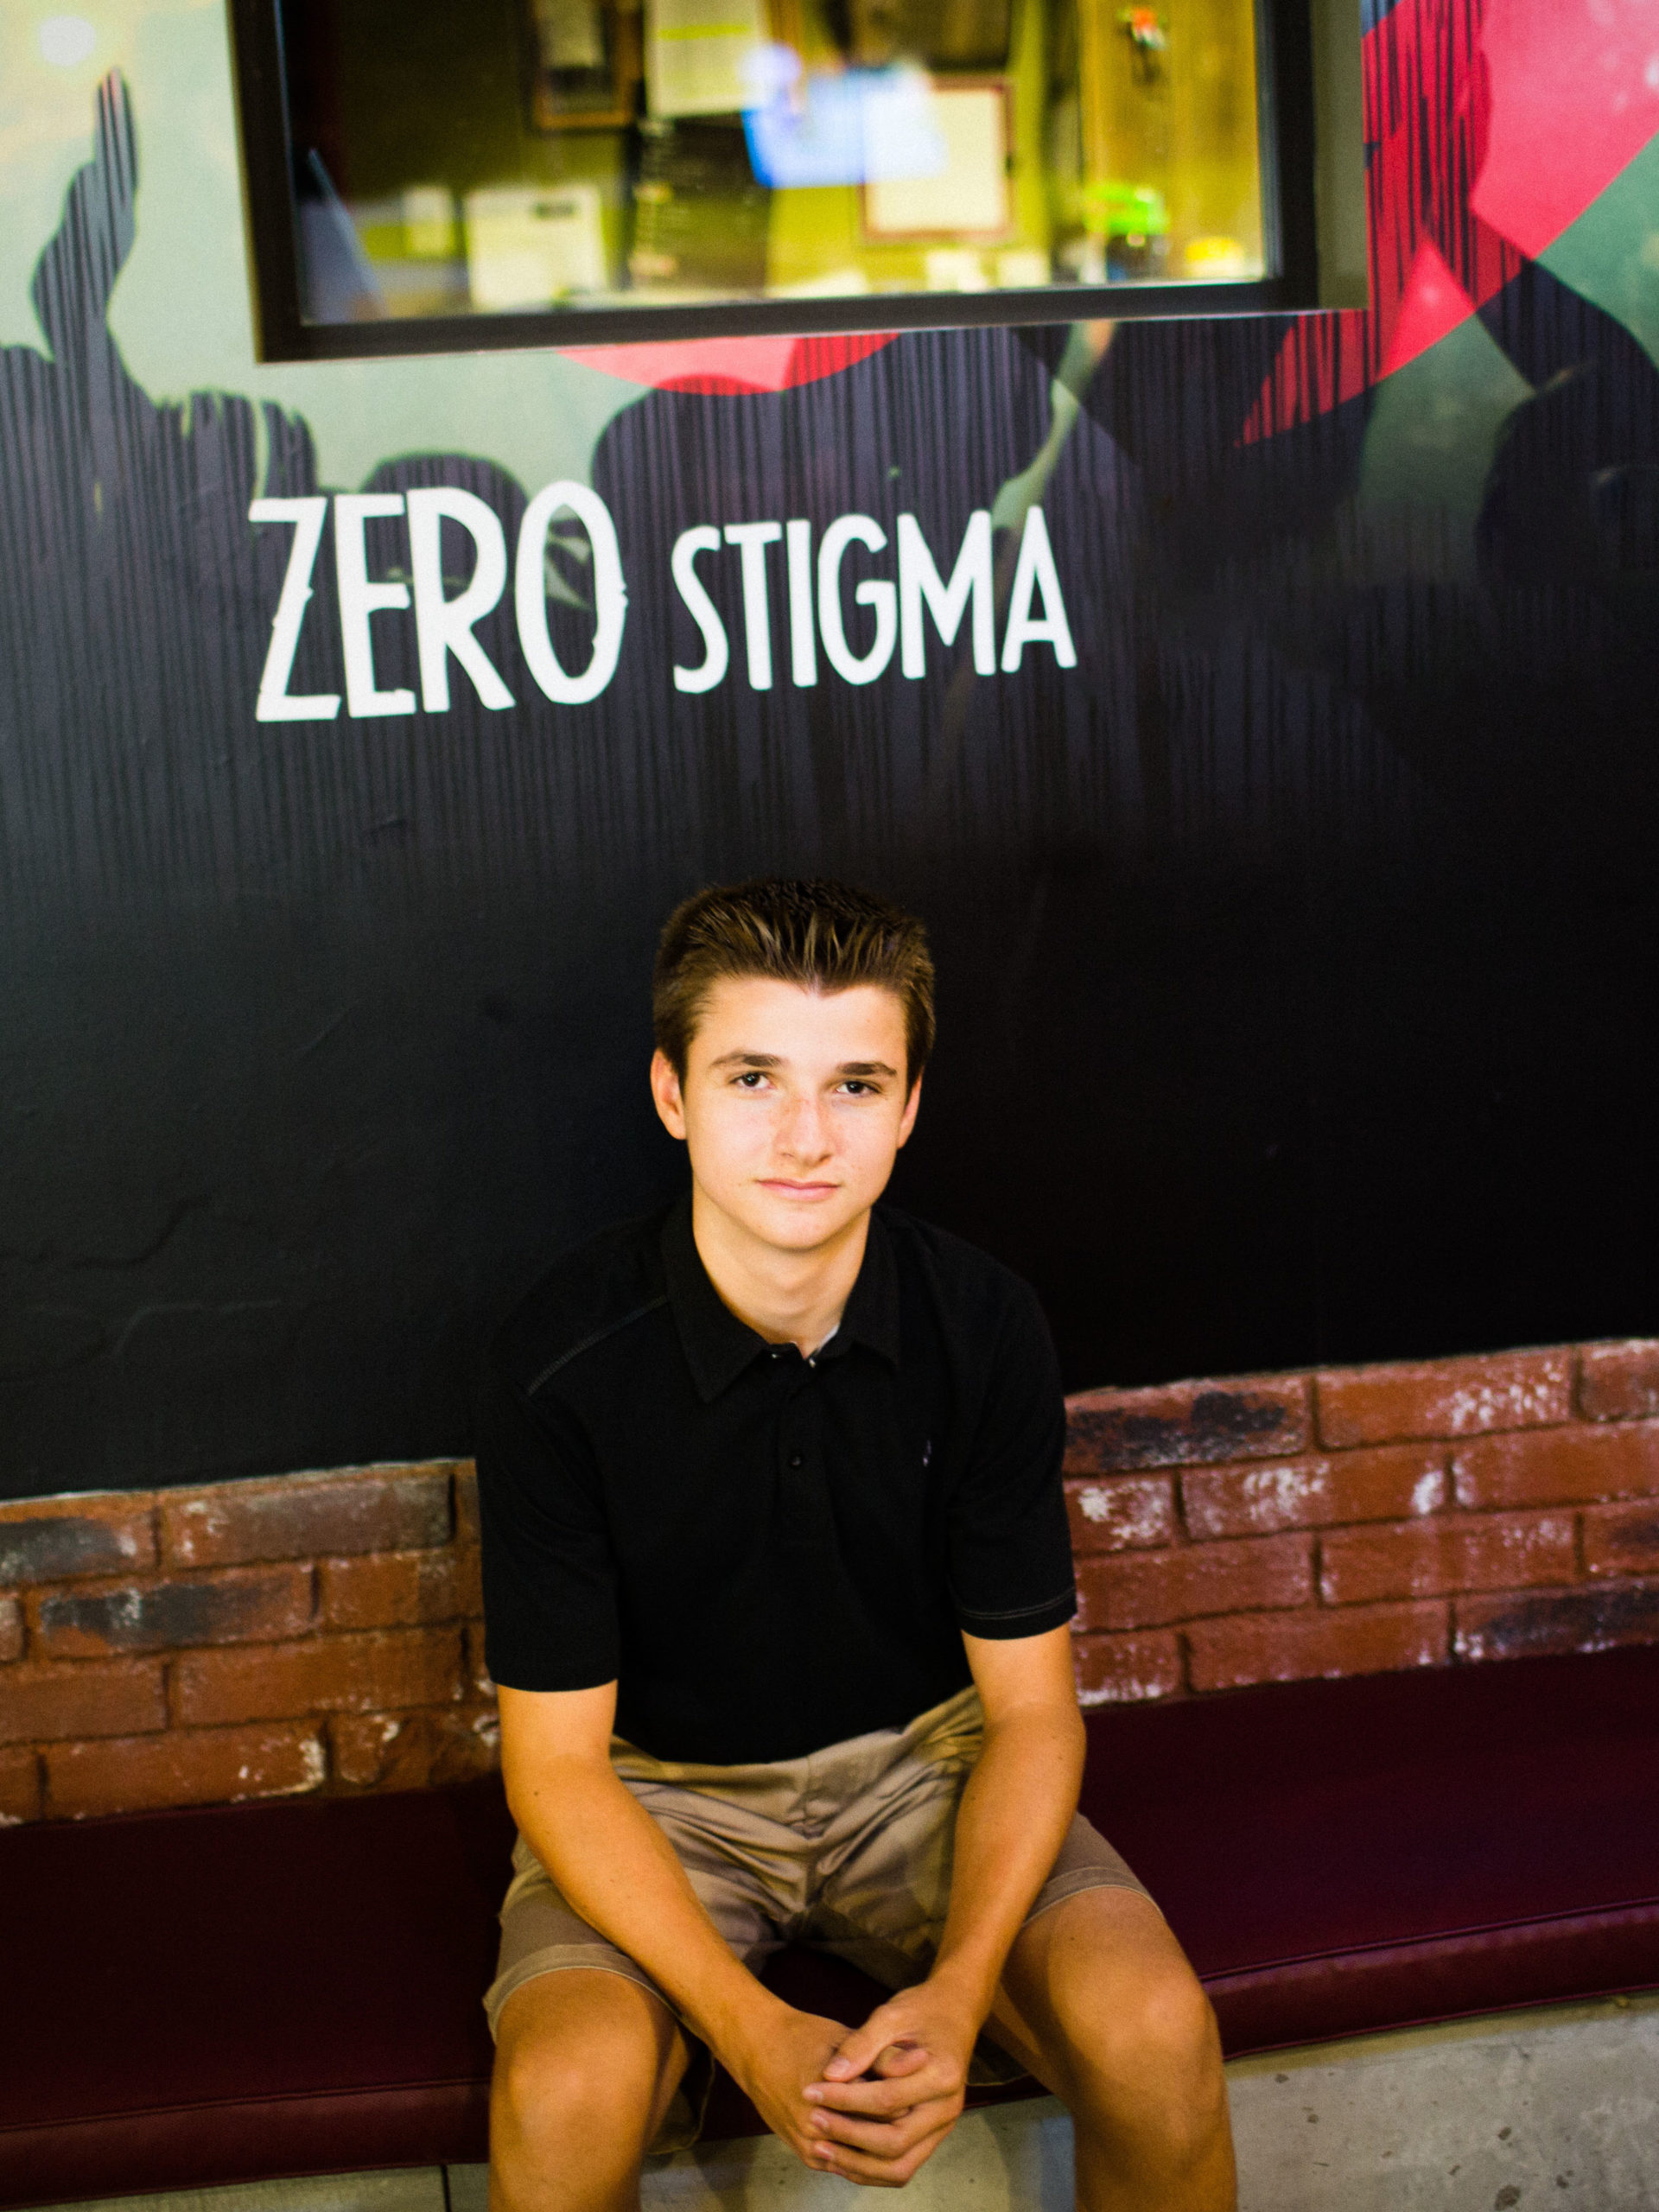 teen boy sitting in front of sign that says "Zero stigma"